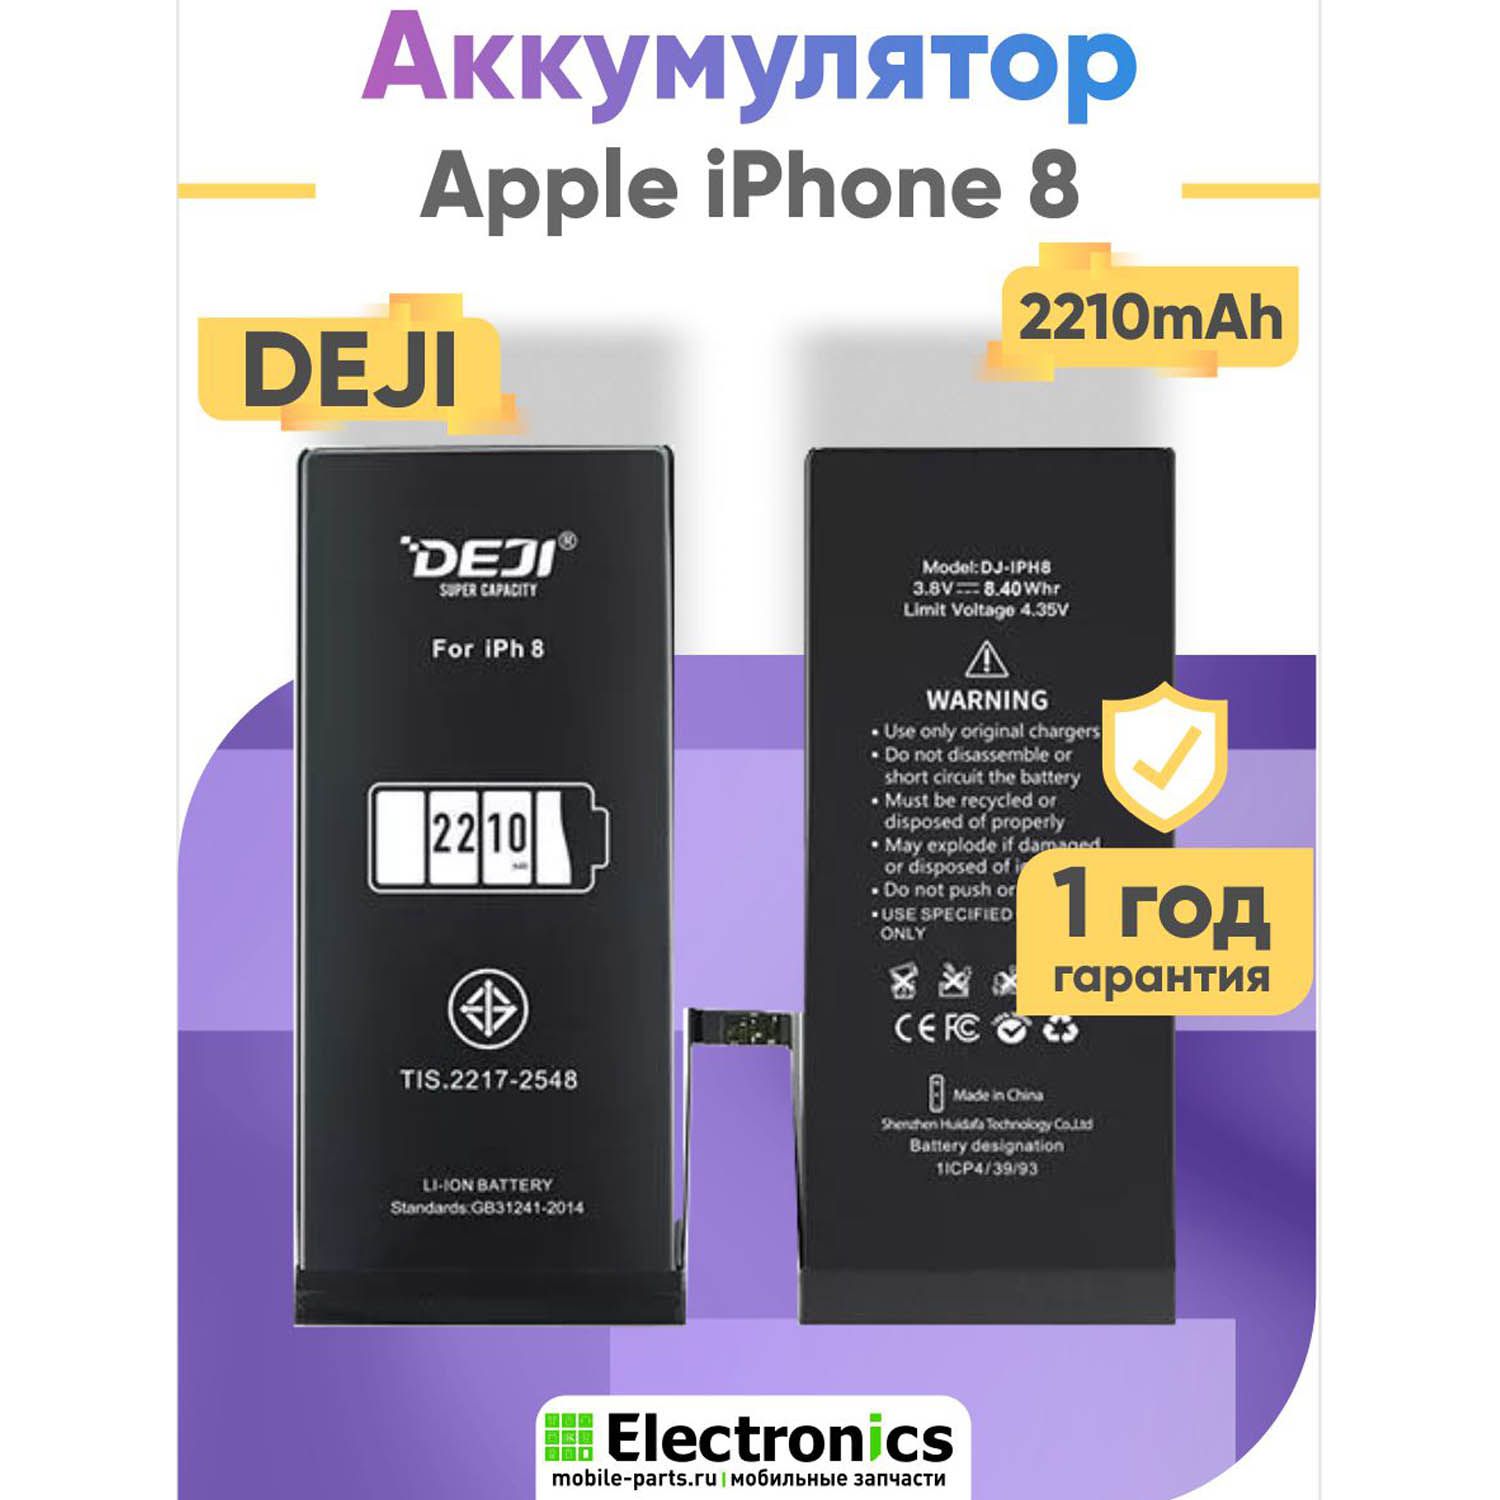 Аккумулятор DEJI Apple iPhone 8 повышенной ёмкости 2210mAh